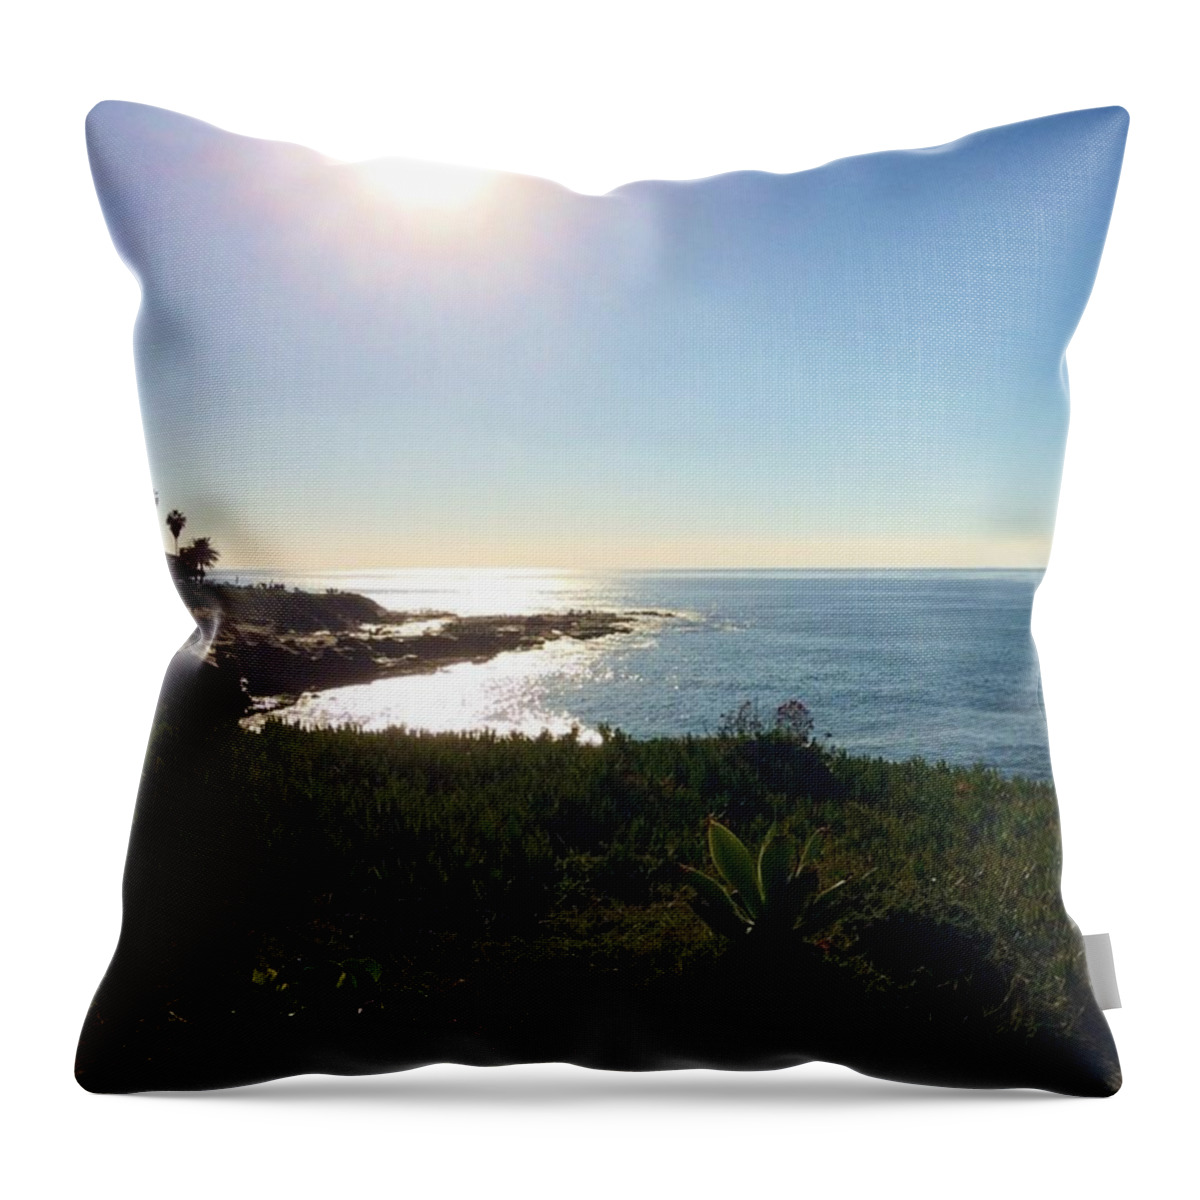 La Jolla Throw Pillow featuring the photograph La Jolla Cove by Lele S